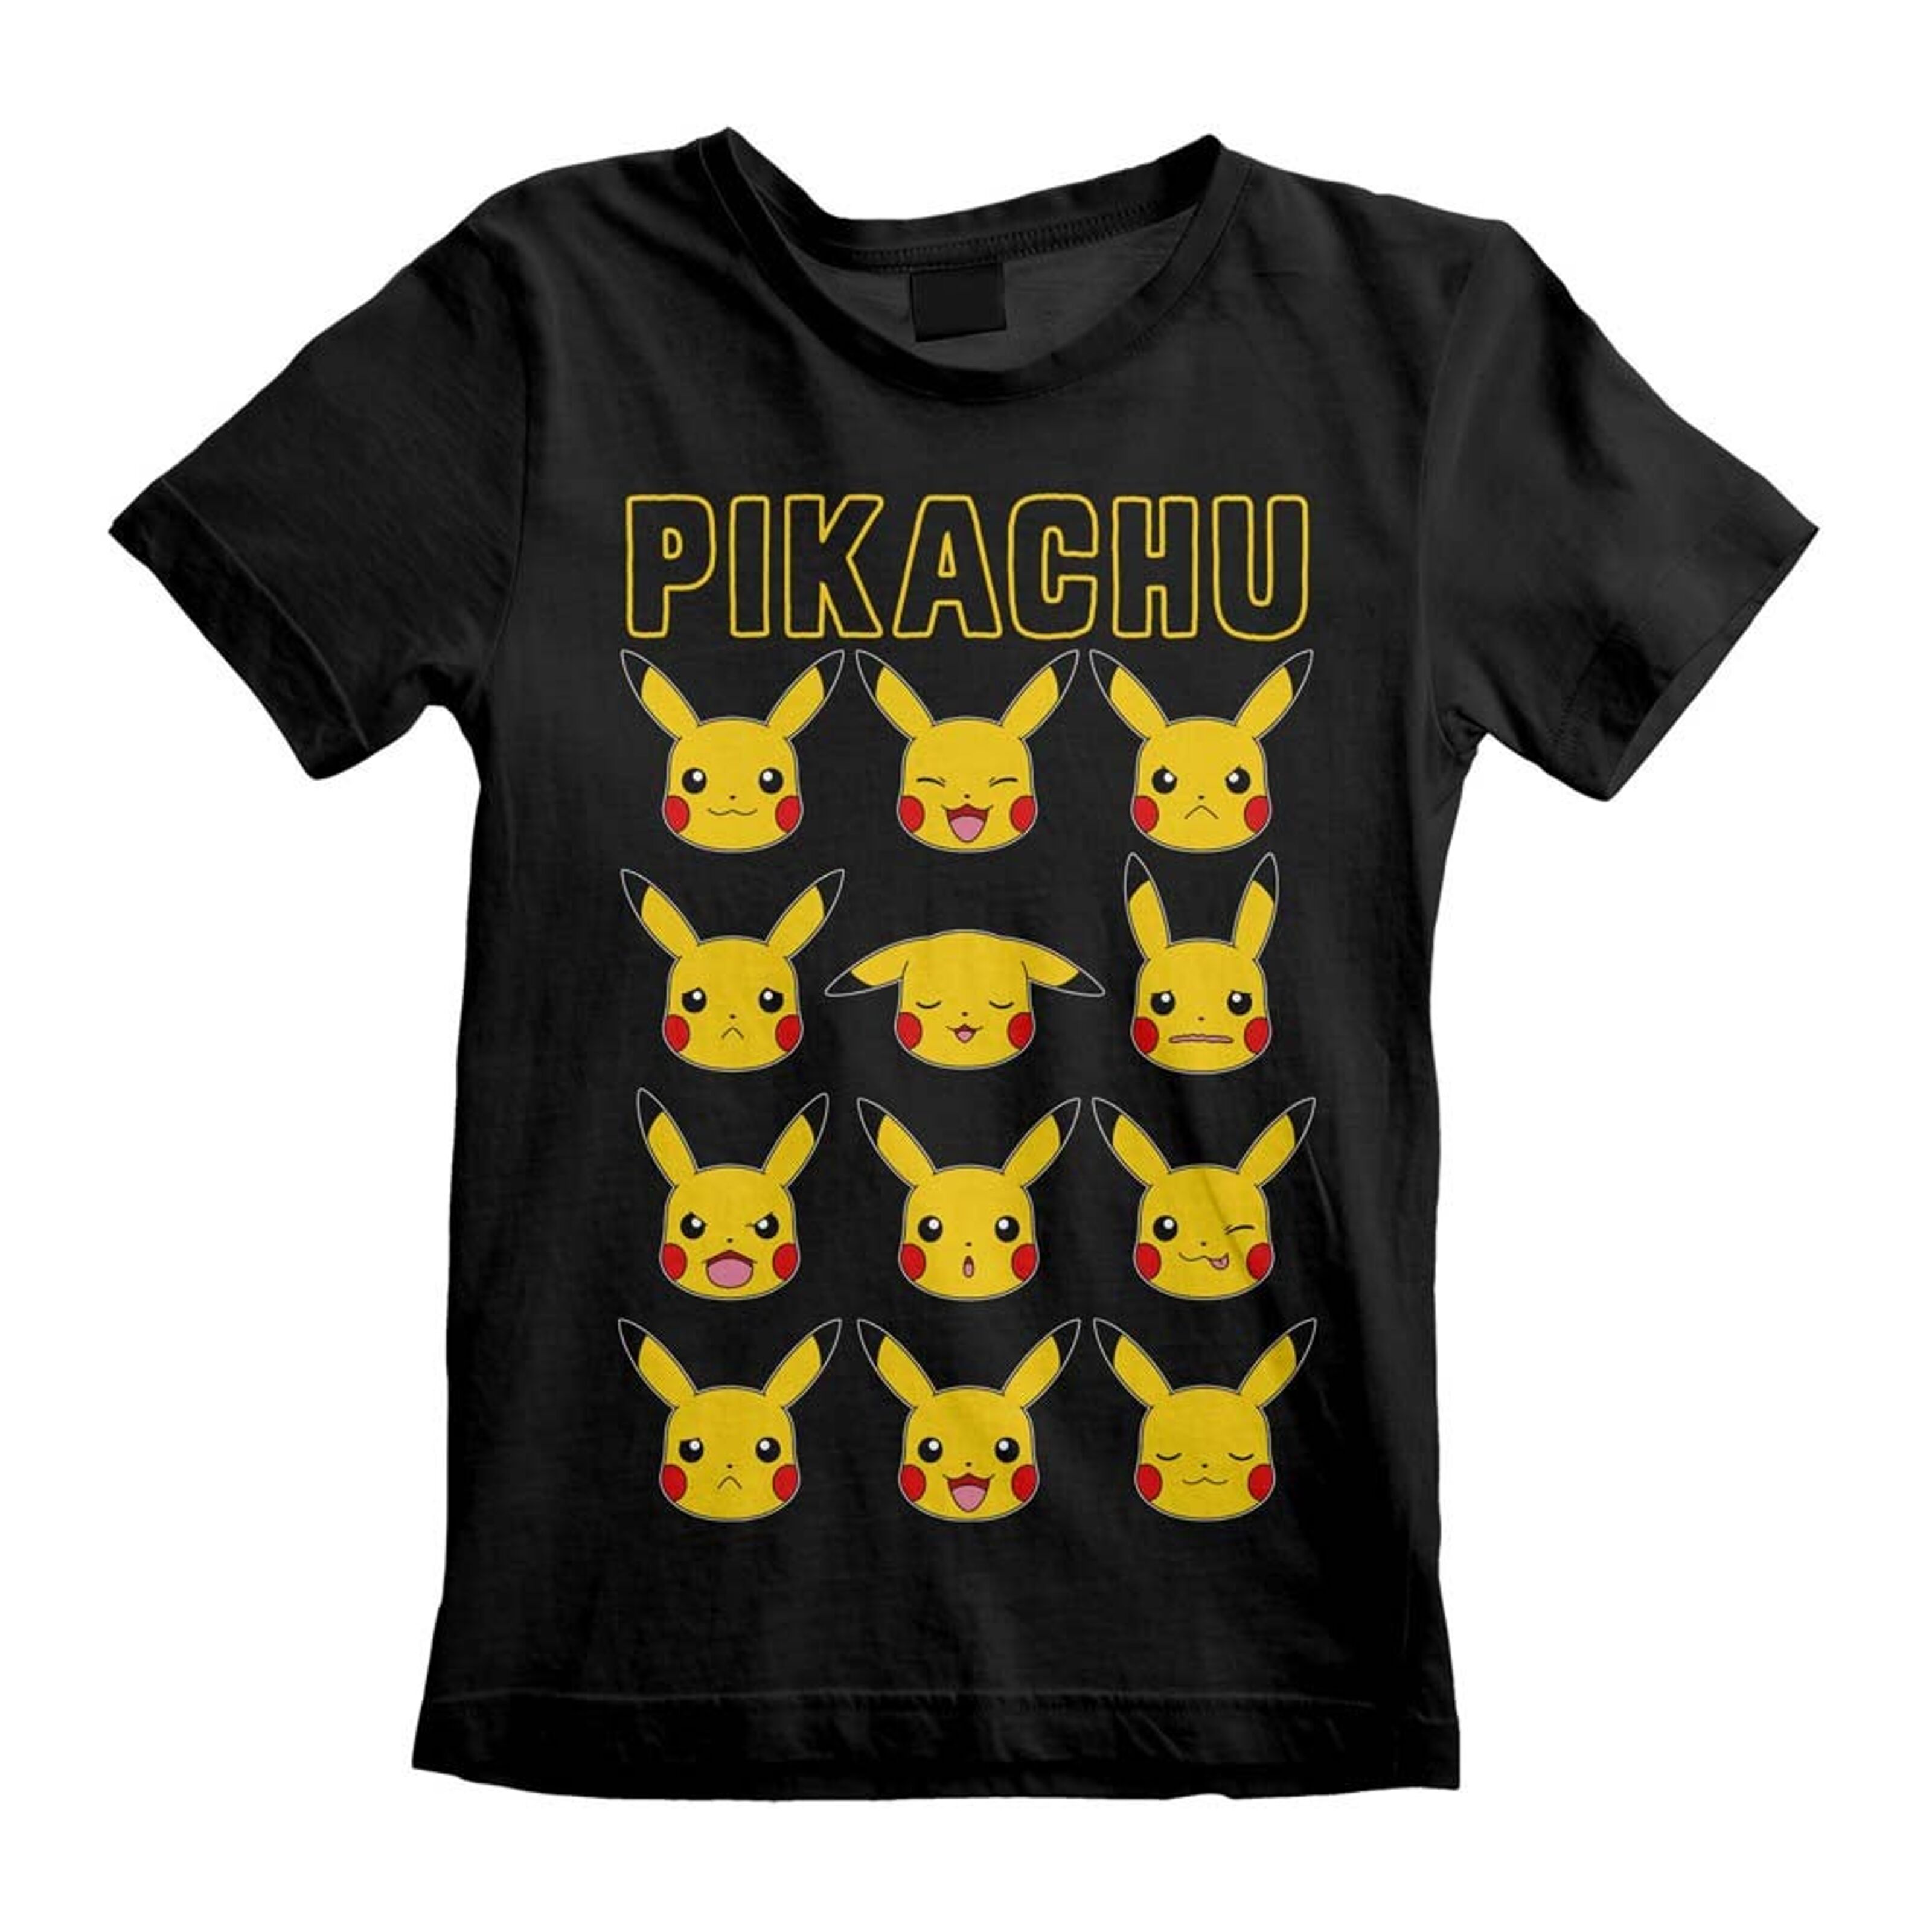 Pokemon Pikachu Black Frame Arkaid